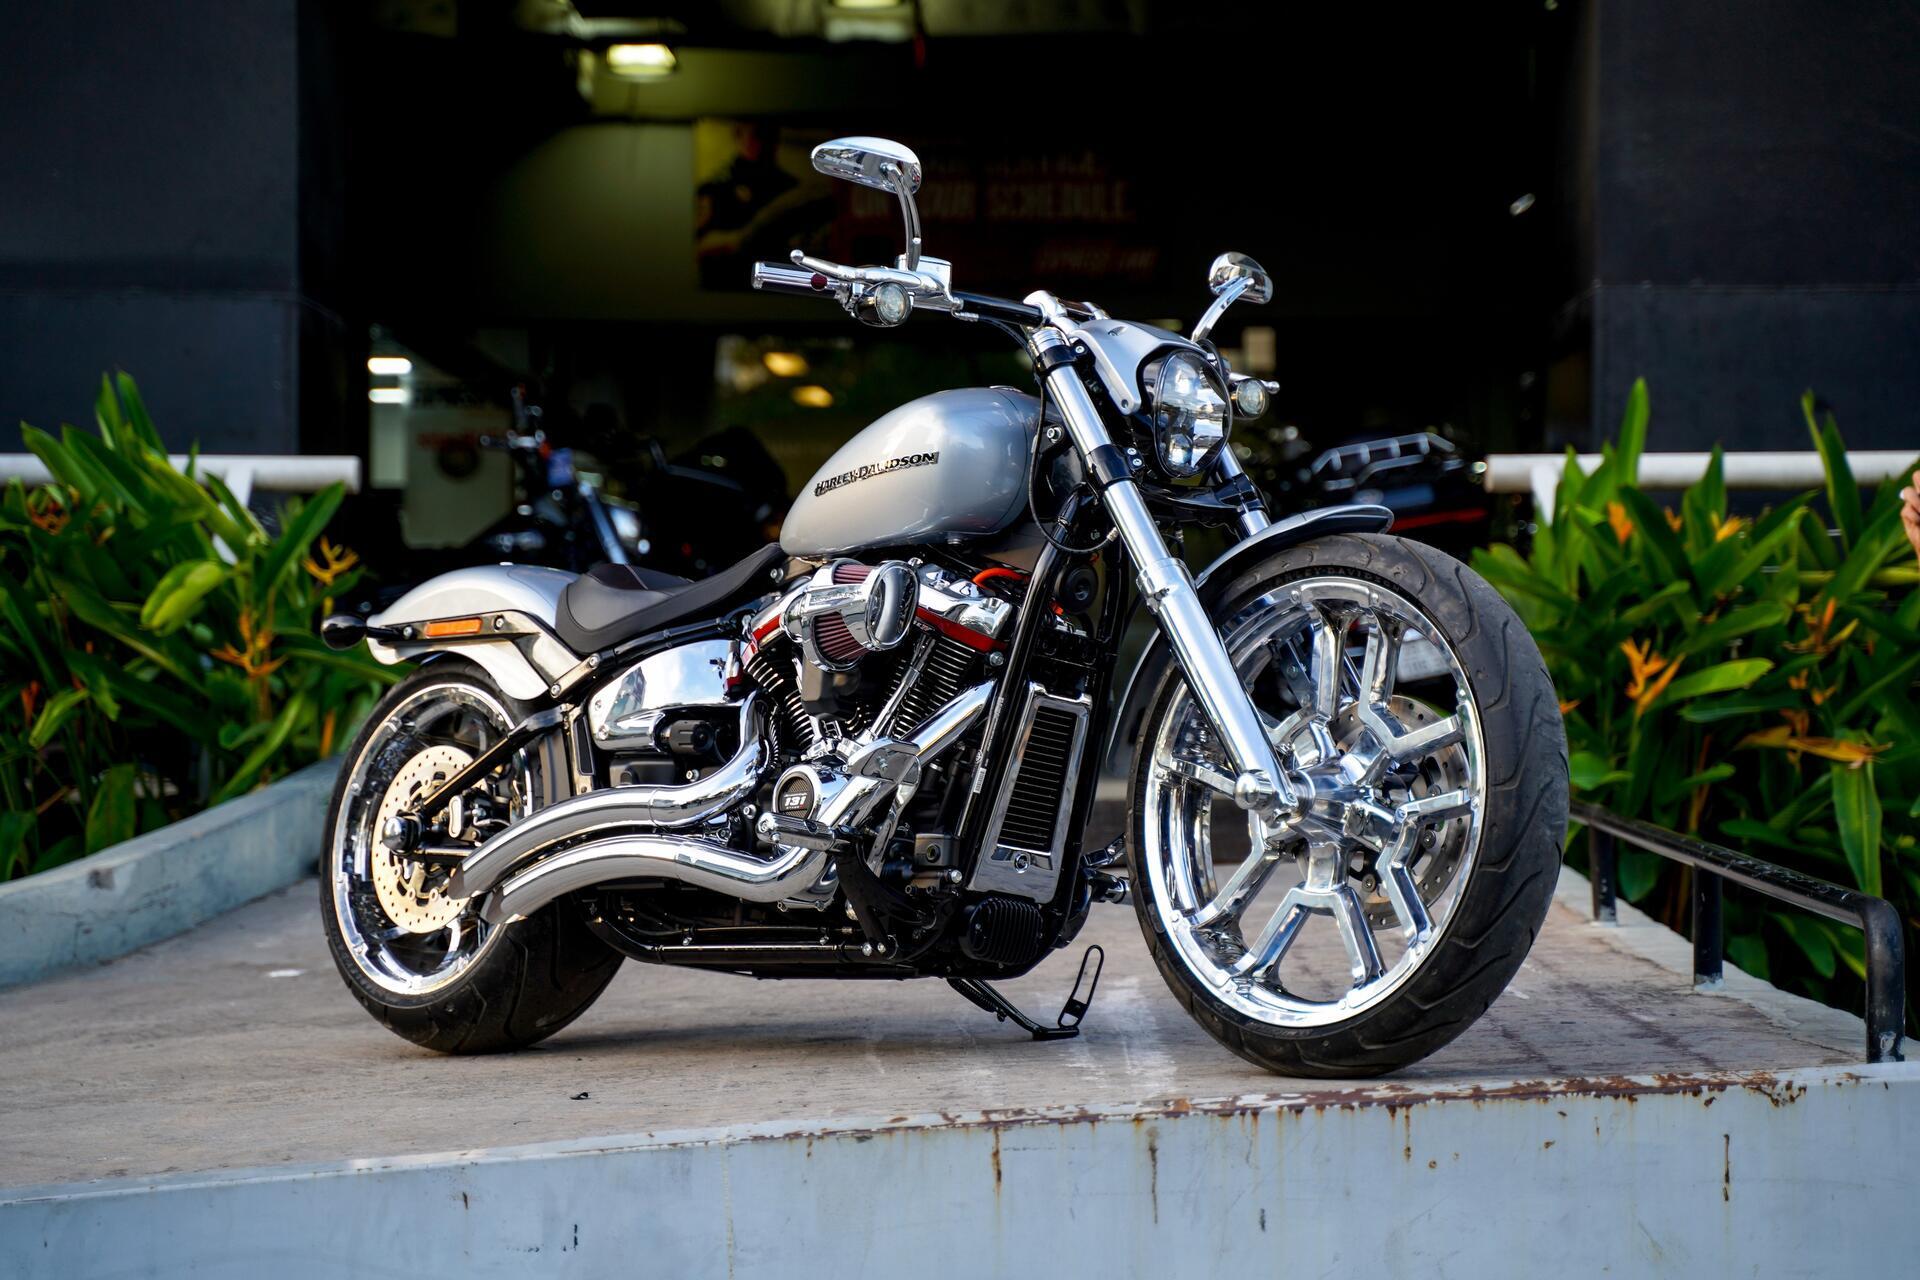 đanh Gia Xe Breakout 114 Từ Harley Davidson Youtube